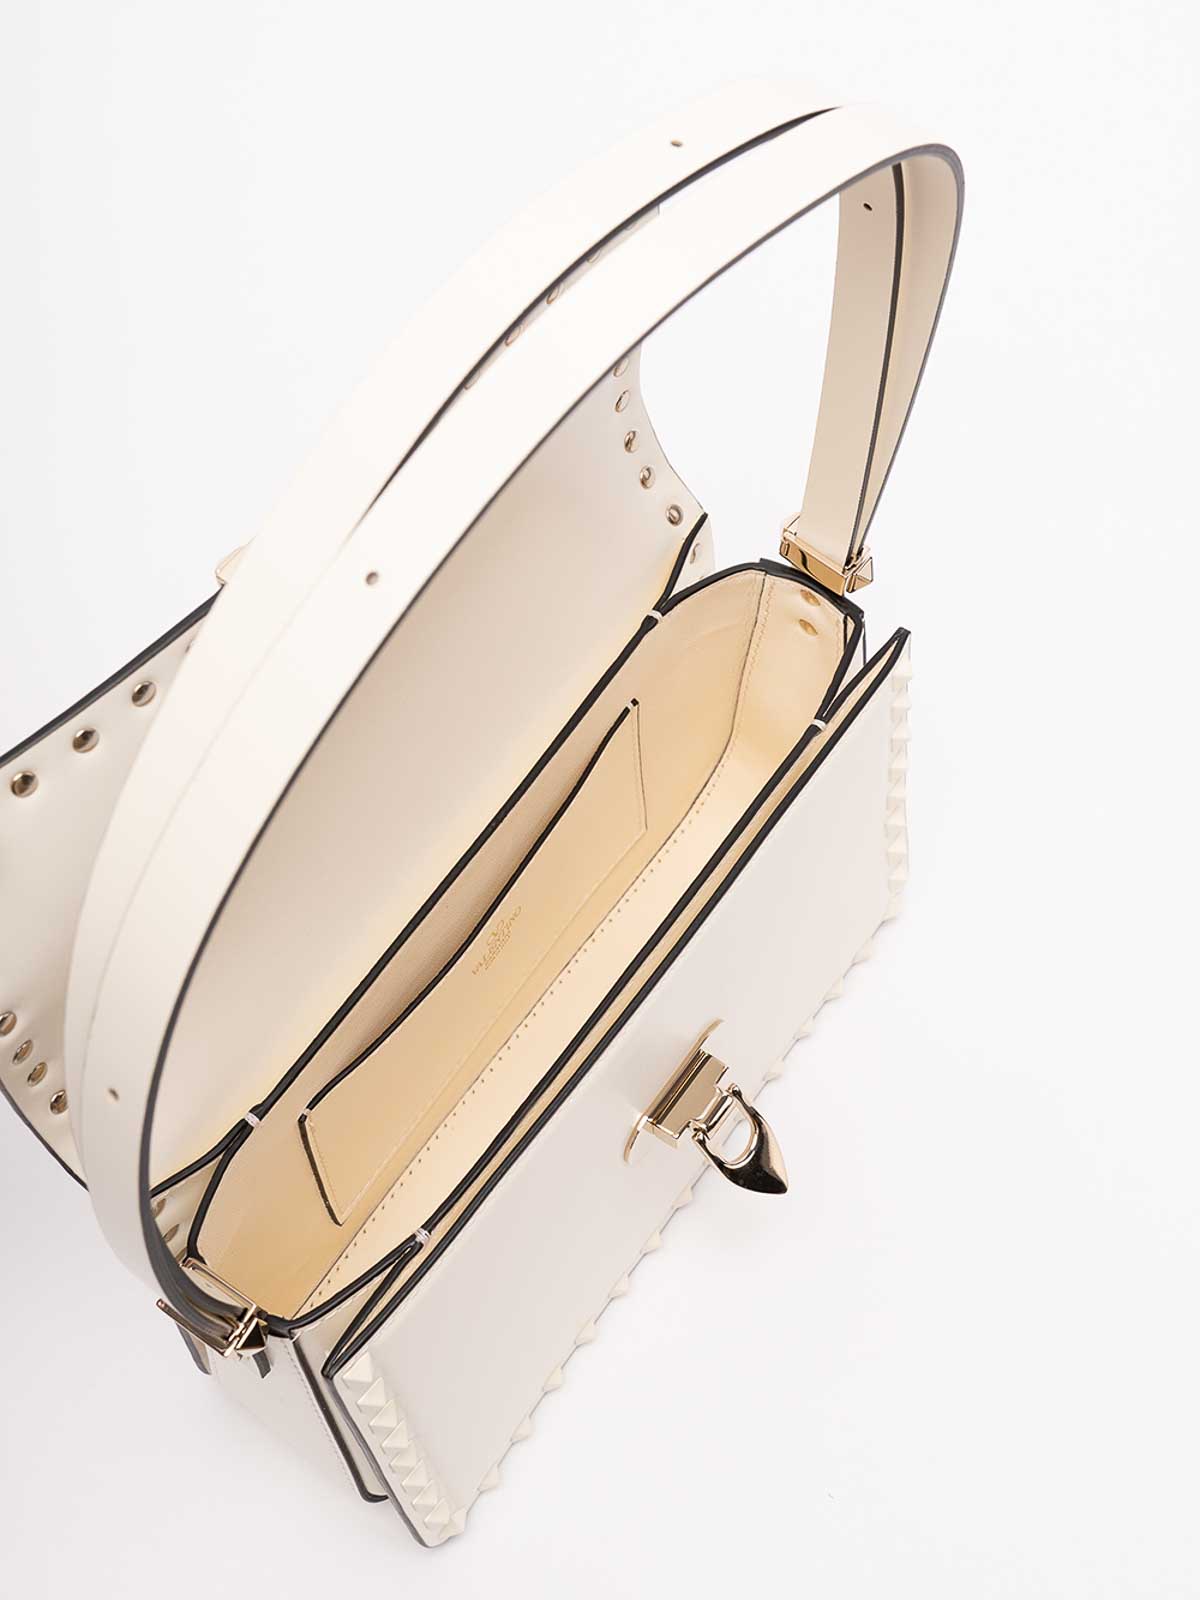 Valentino Garavani Shoulder bag ROCKSTUD calfskin online shopping